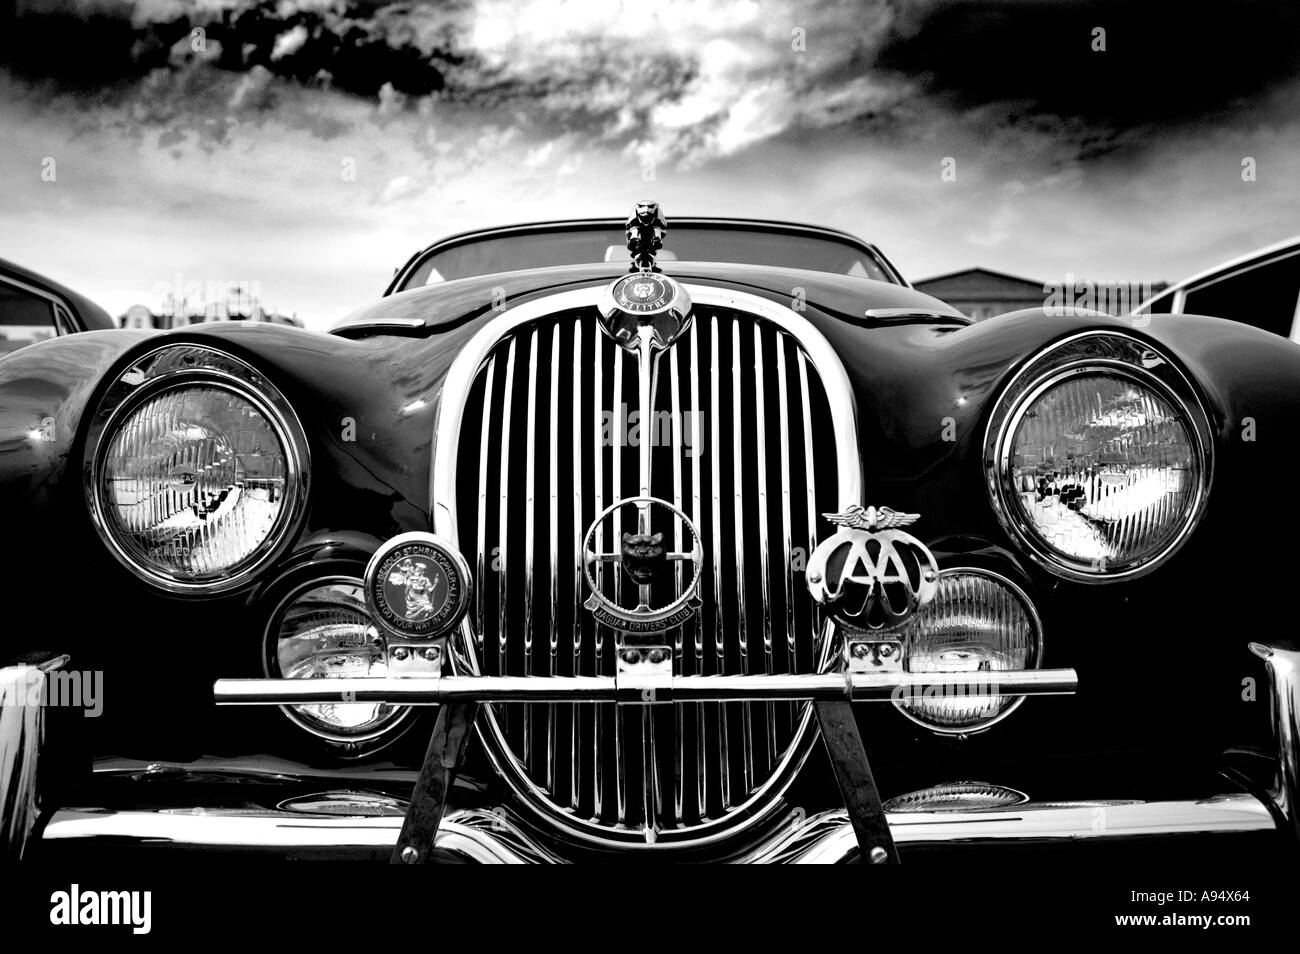 Classic Jaguar car at Car Show. EDITORIAL USE ONLY. Stock Photo